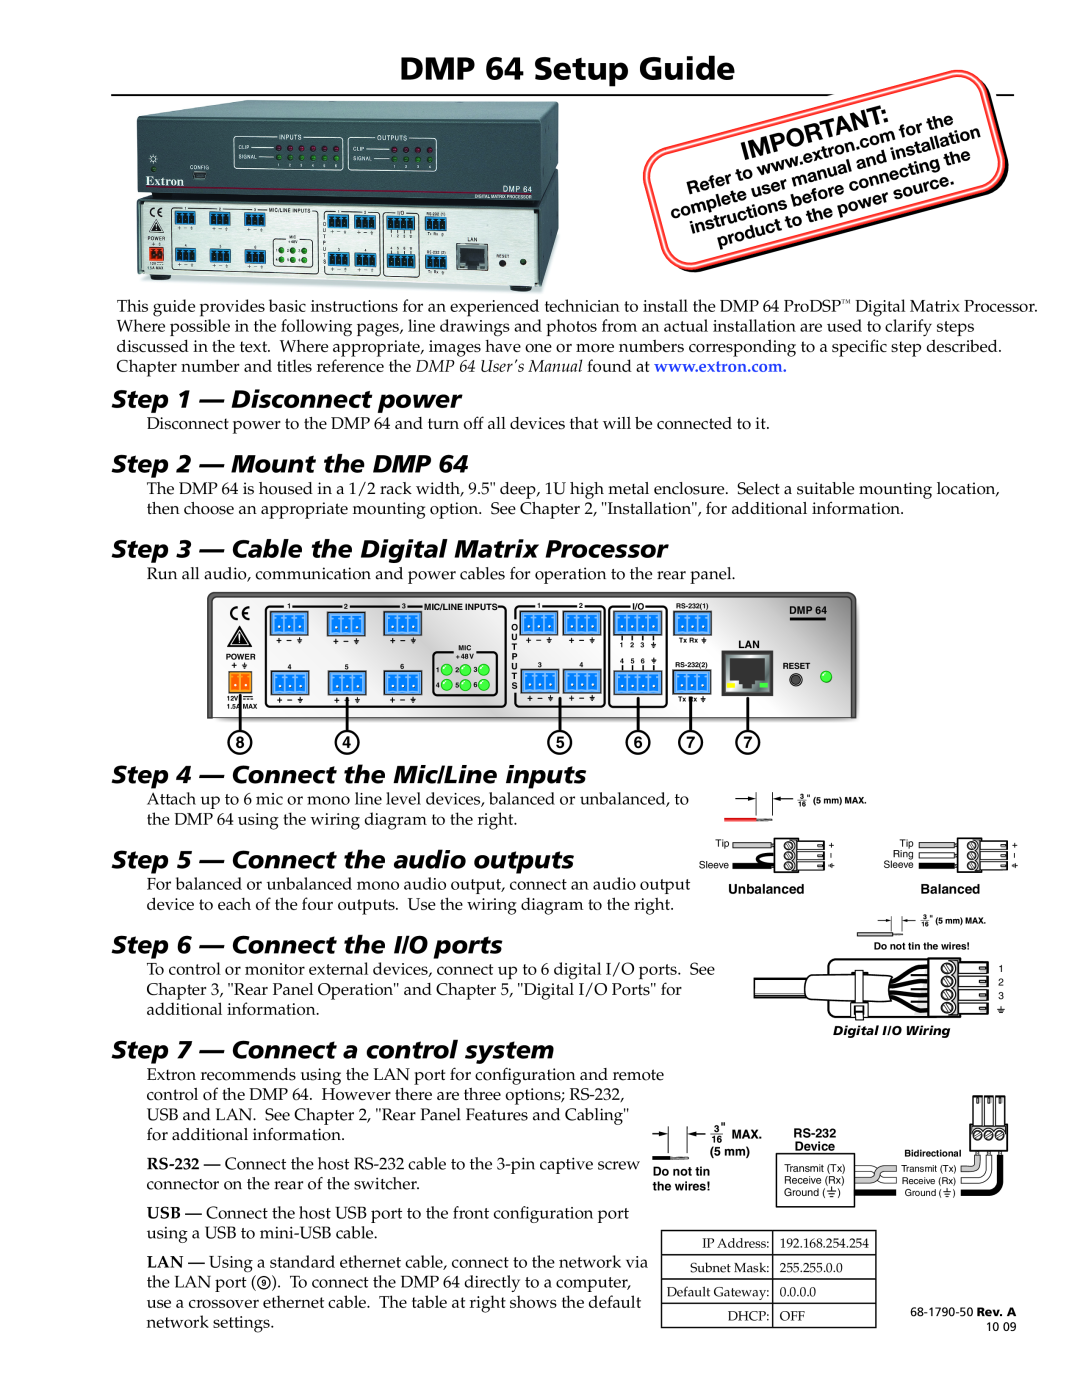 Extron electronic DMP 64 setup guide Disconnect power, Mount the DMP, Cable the Digital Matrix Processor, e f g g 